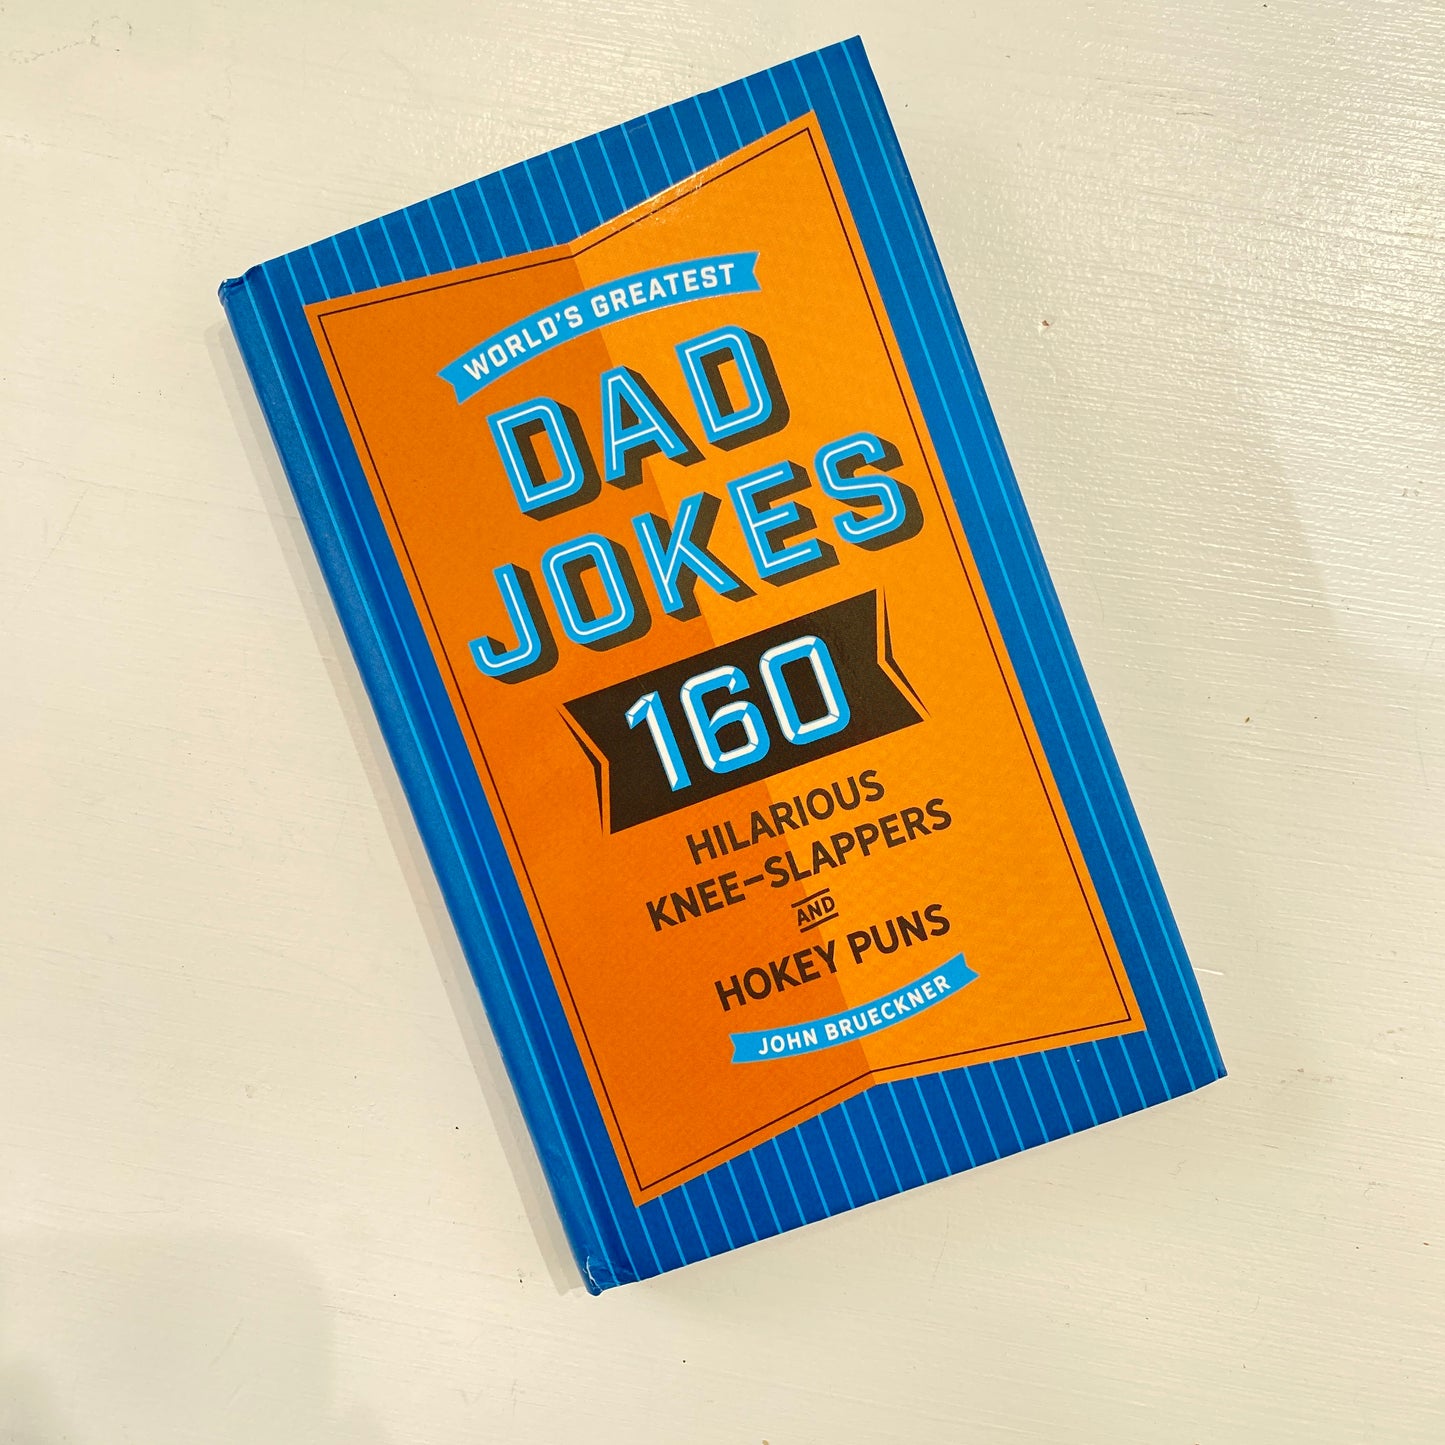 Cider Mill Press - World's Greatest Dad Jokes